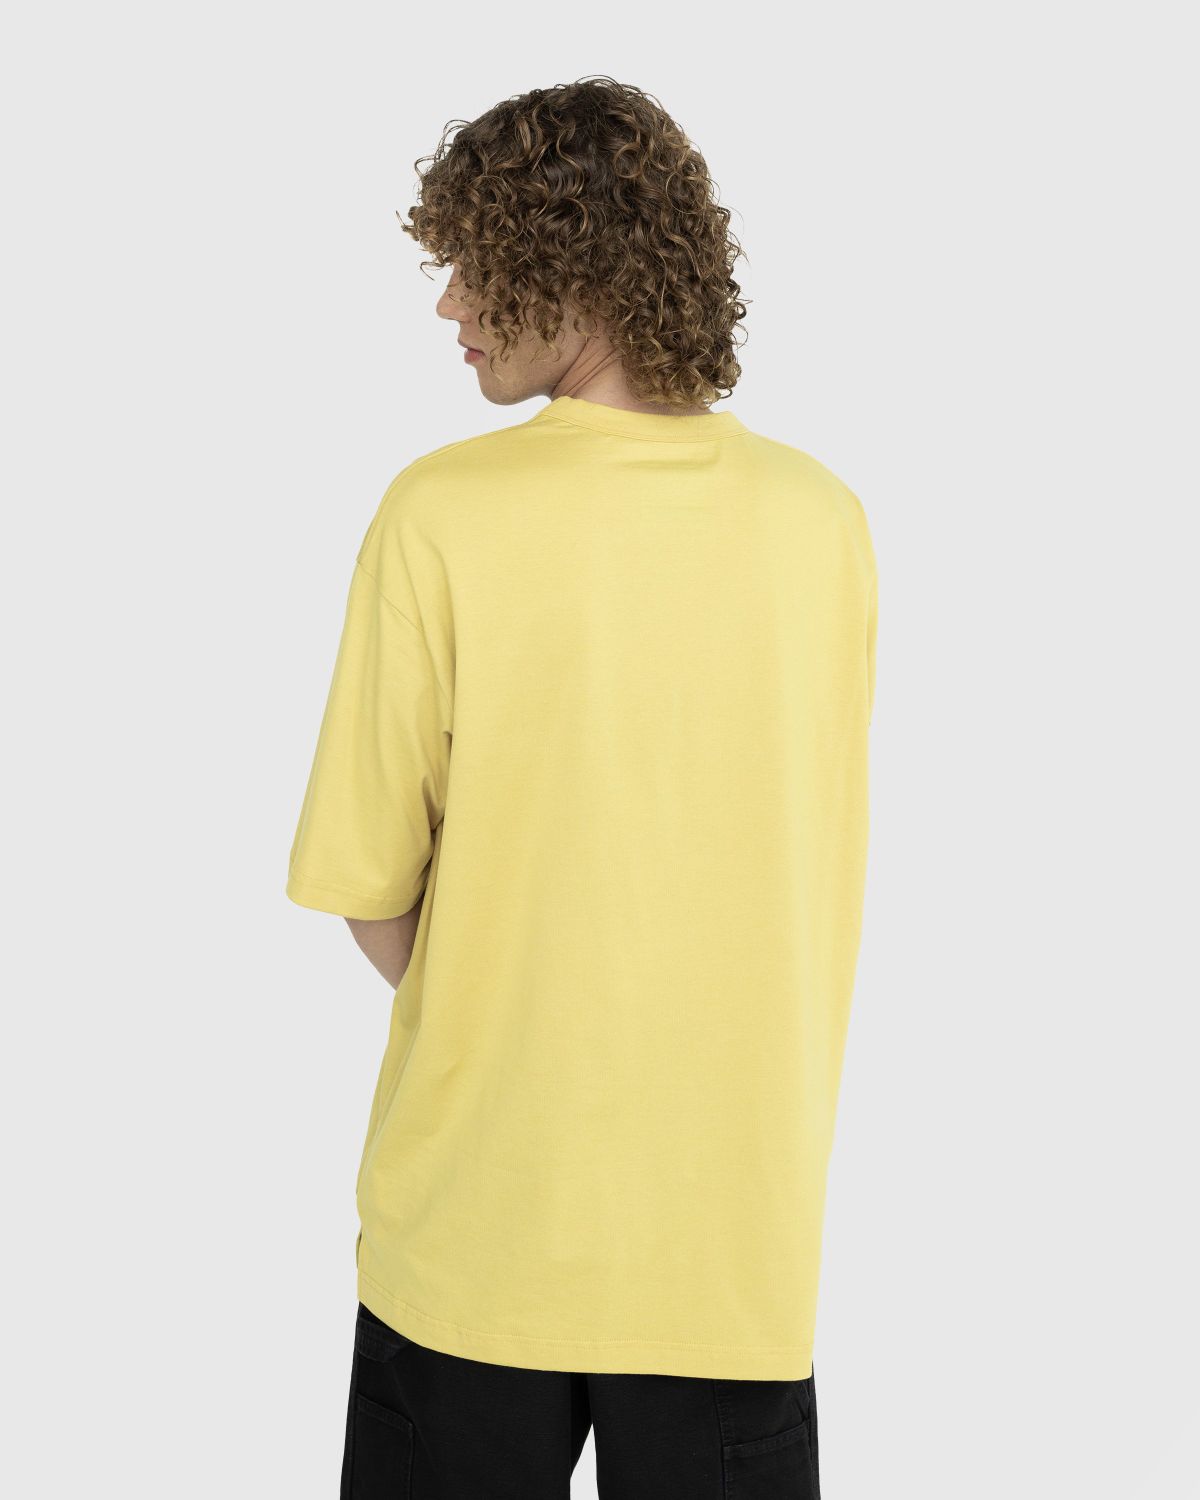 Y-3 – Tokyo T-Shirt Blanch Yellow | Highsnobiety Shop